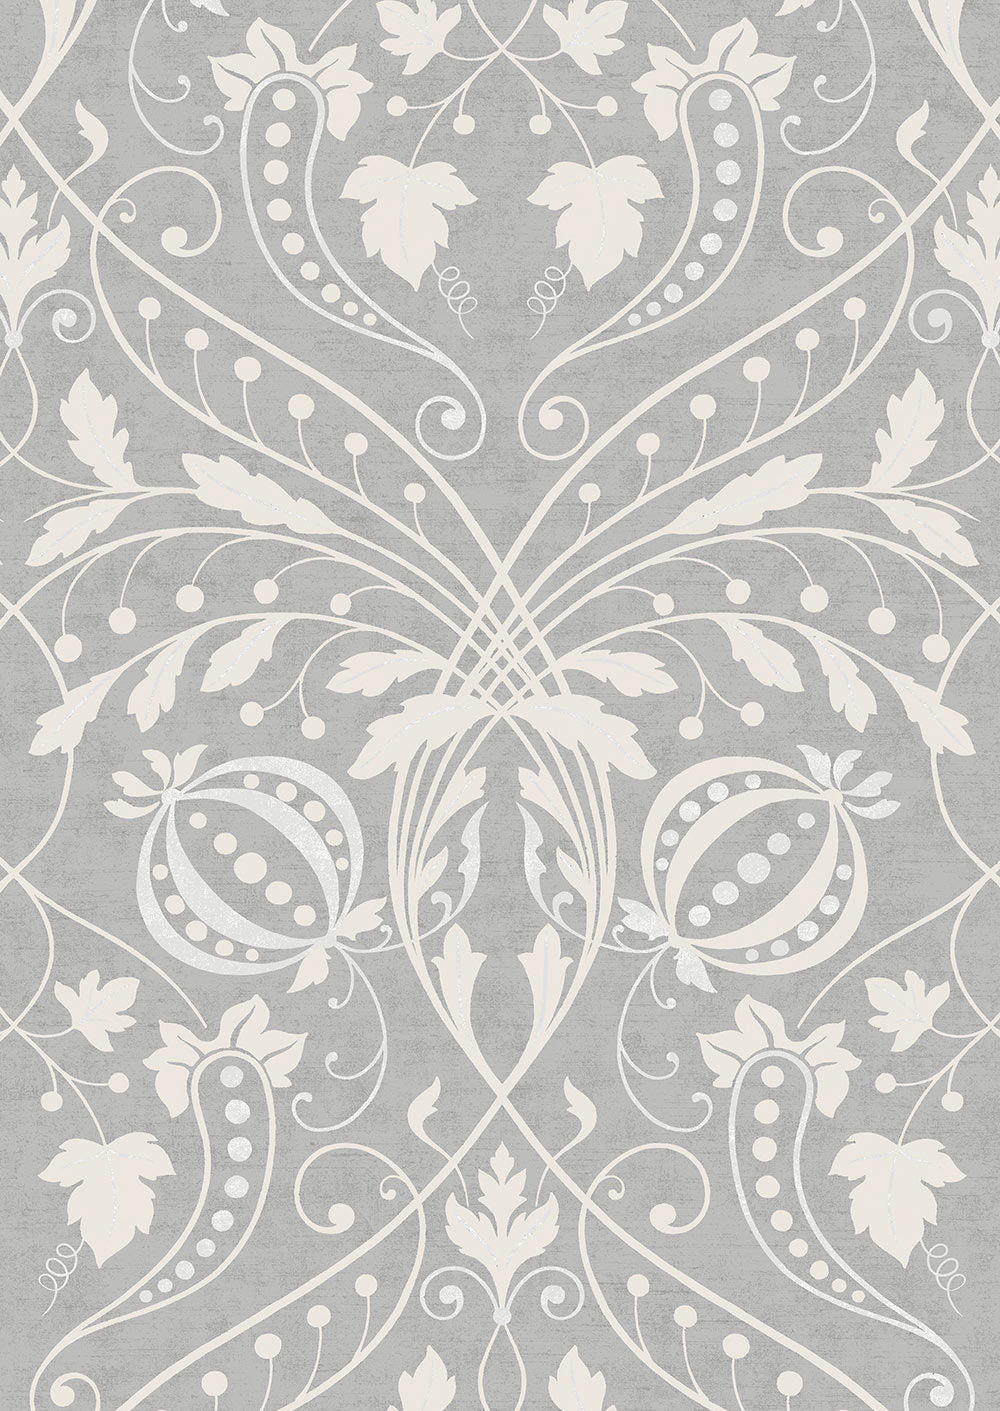 Chateau Room Wallpaper - Gray